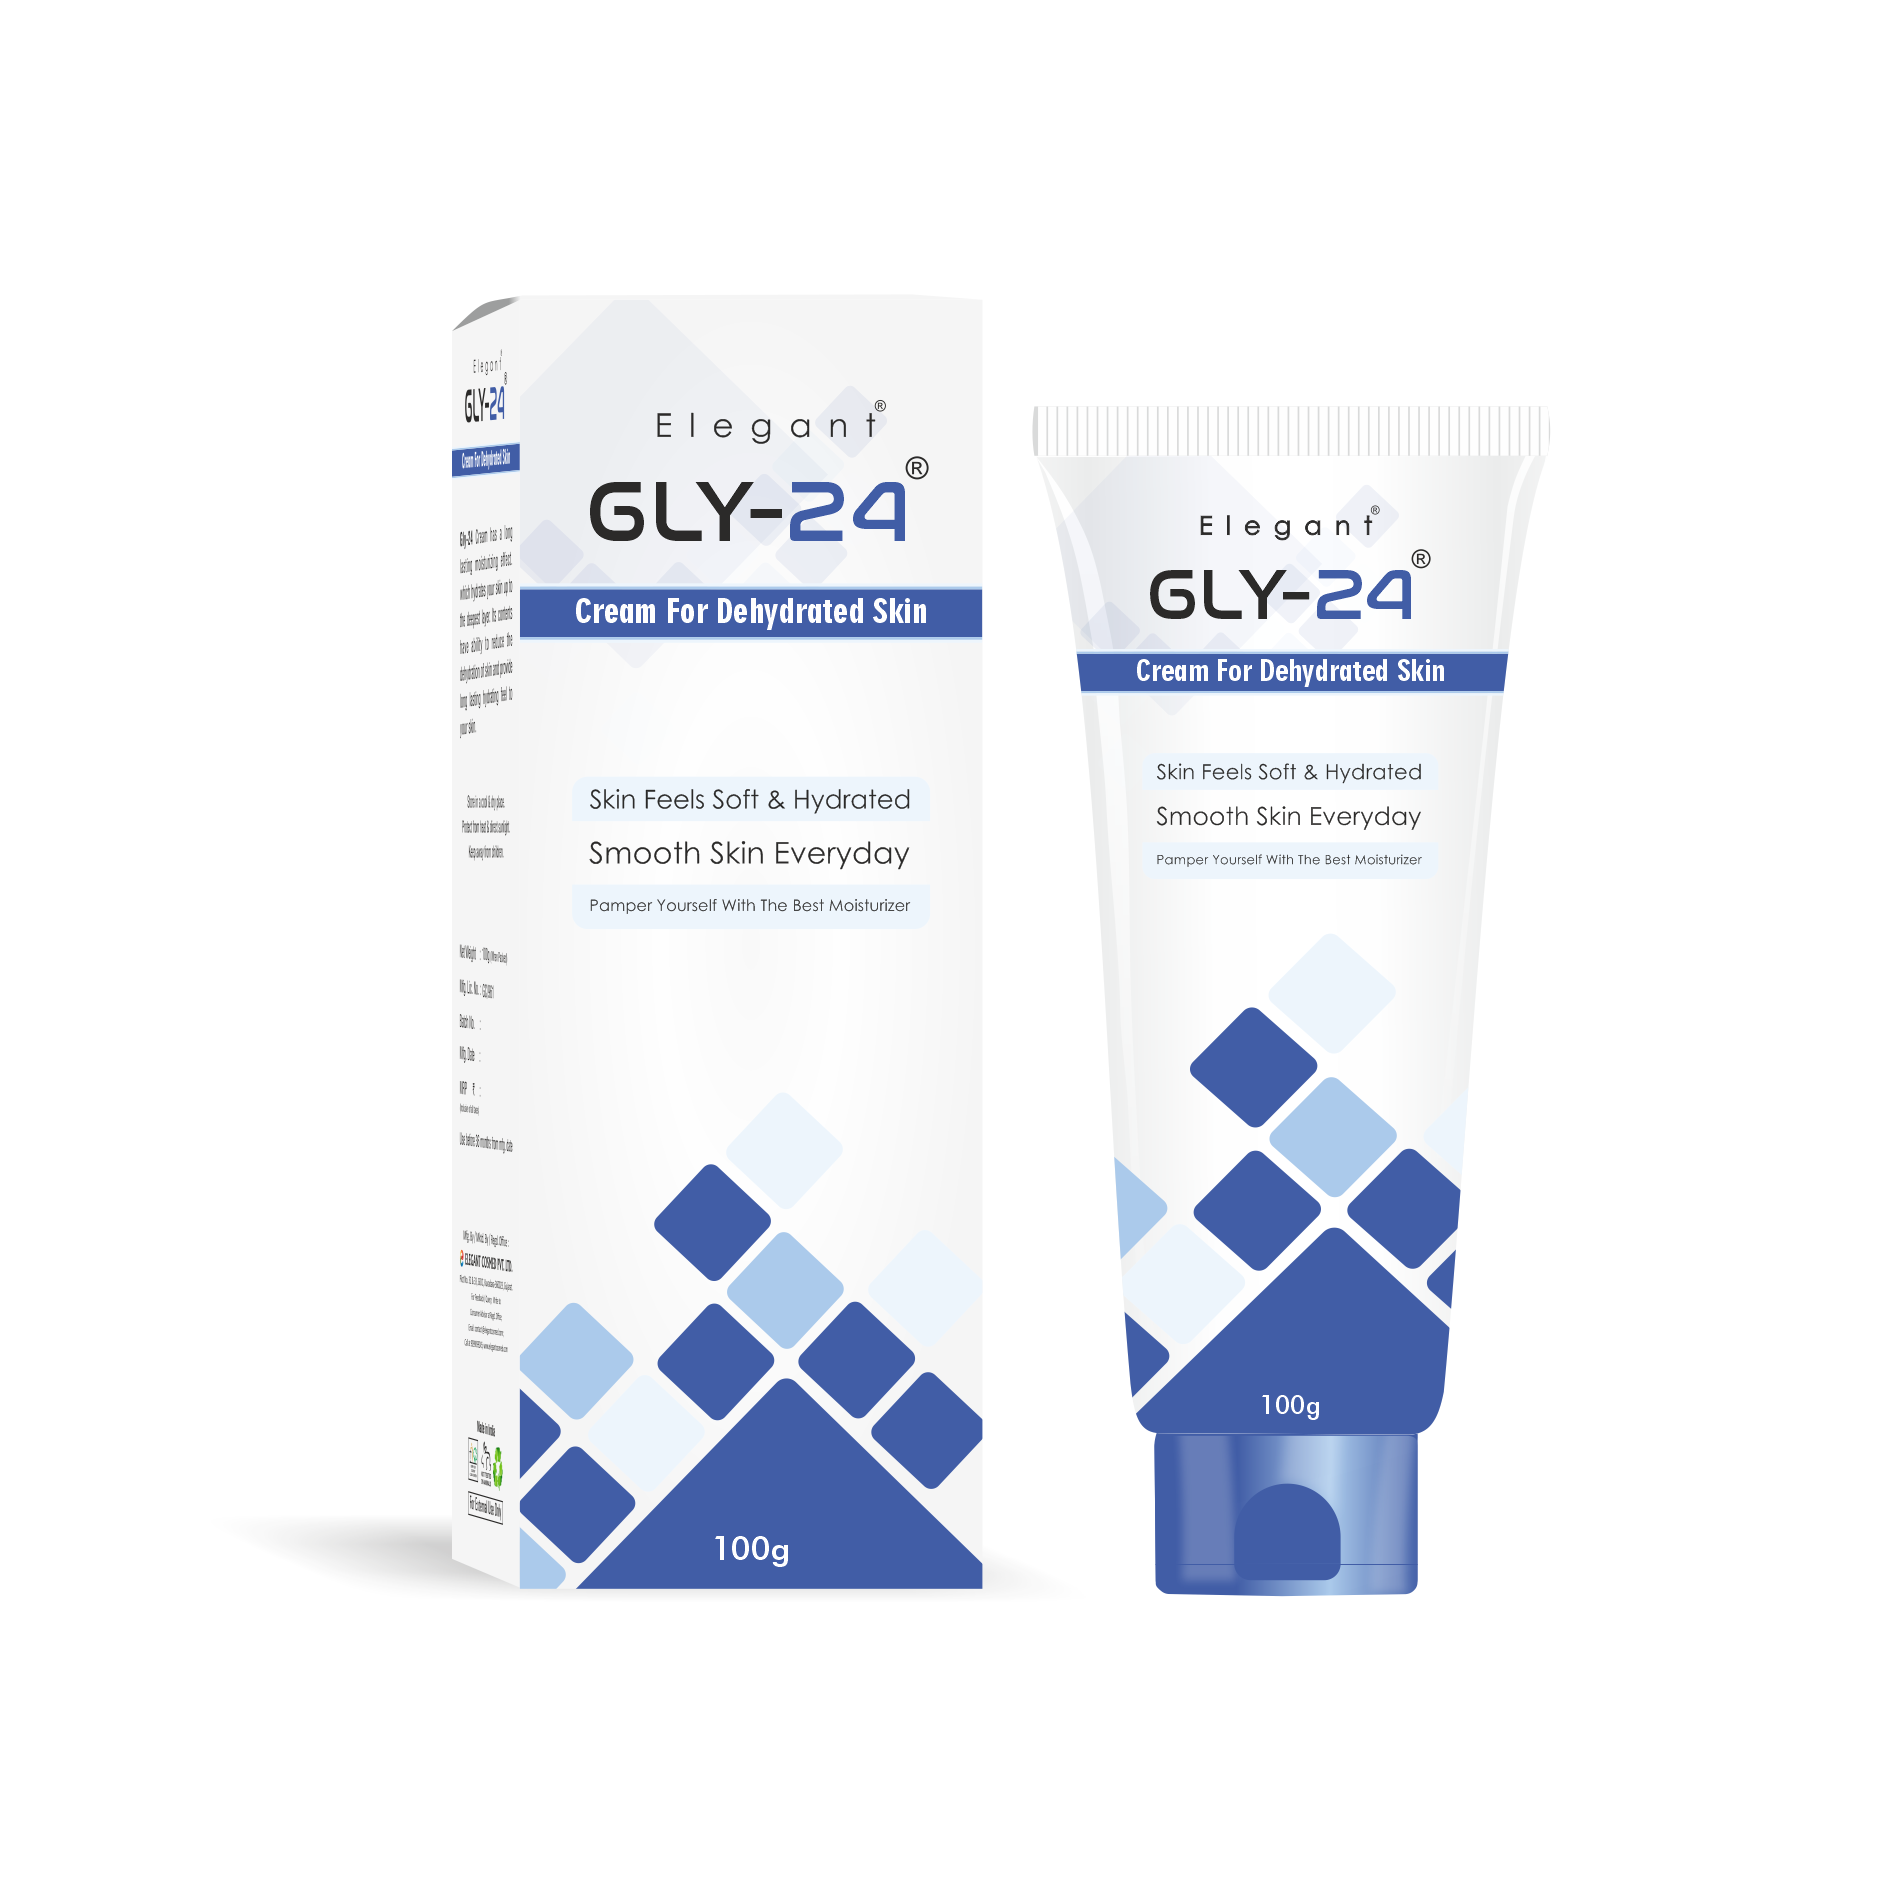 Gly-24 Dehydrated Skin Cream